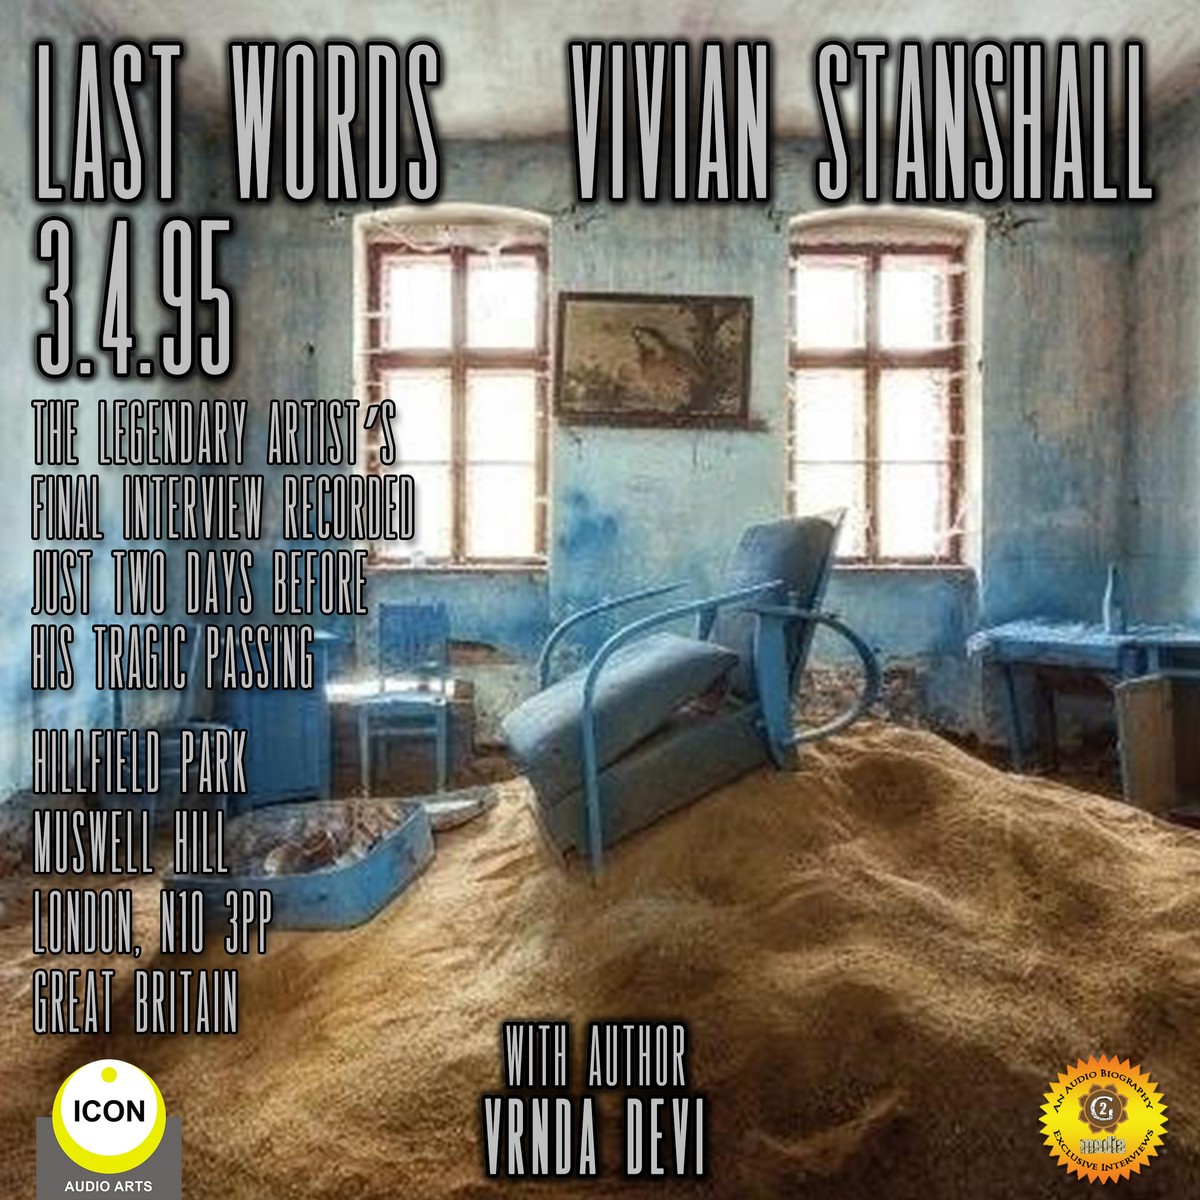 Last Words – Vivain Stanshall 3.4.95